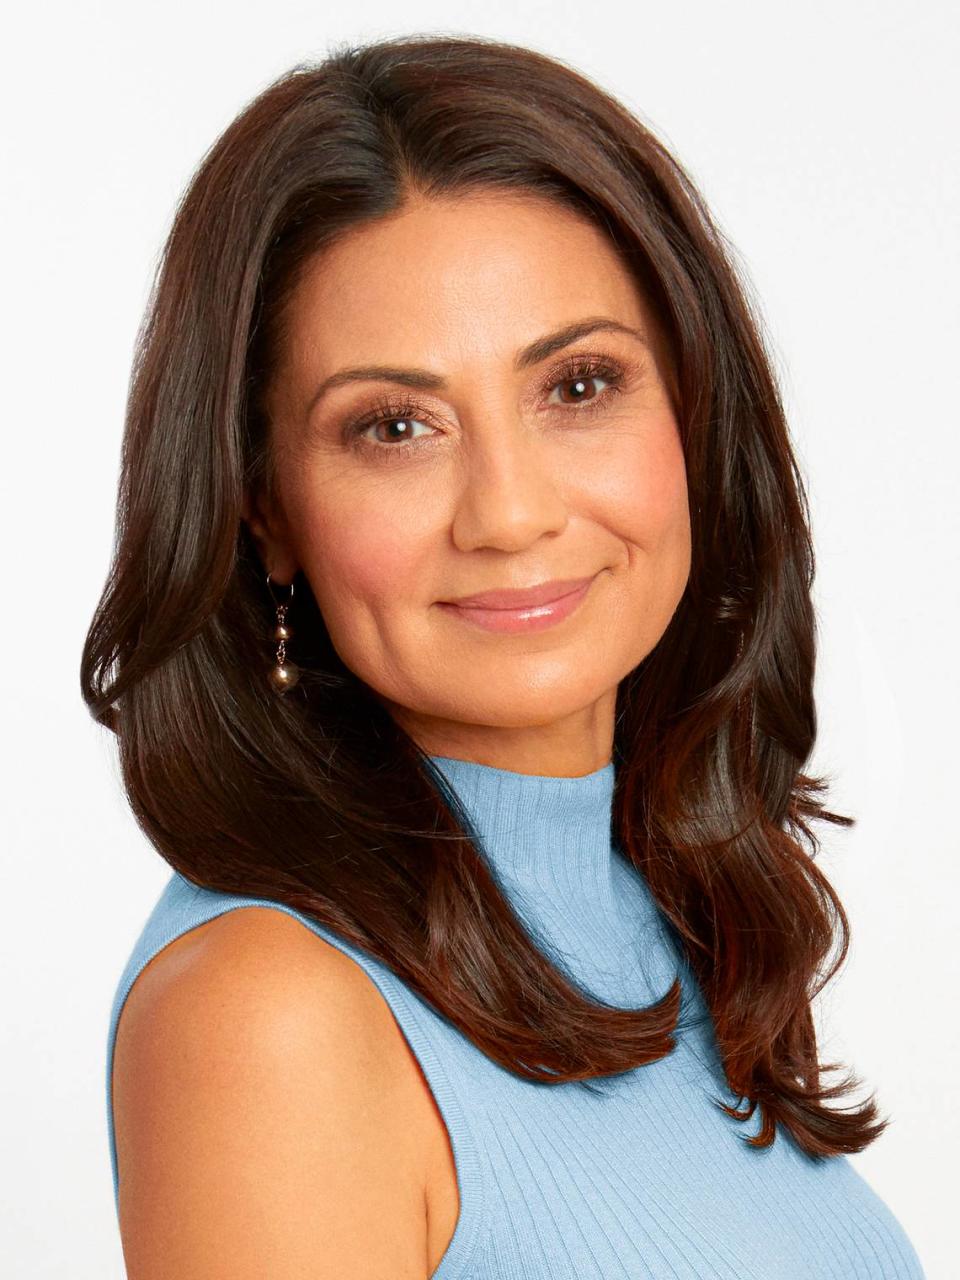 Mónica Gil es la directora administrativa y de marketing de NBCUniversal Telemundo Enterprises.